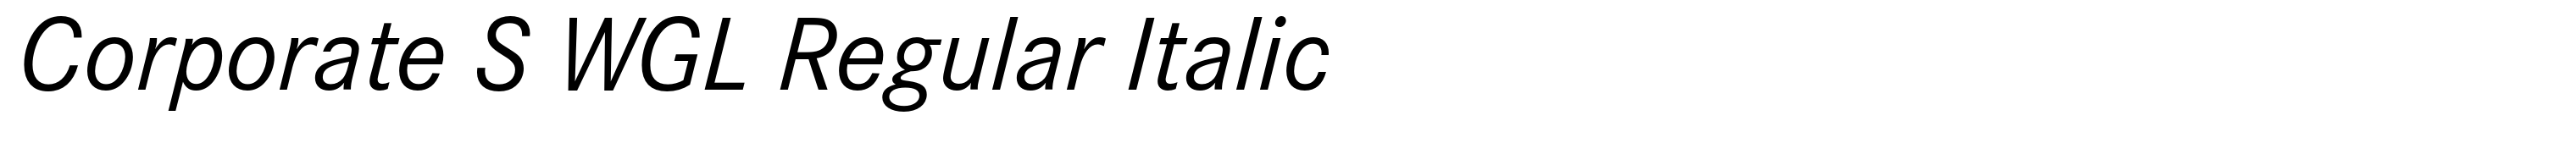 Corporate S WGL Regular Italic